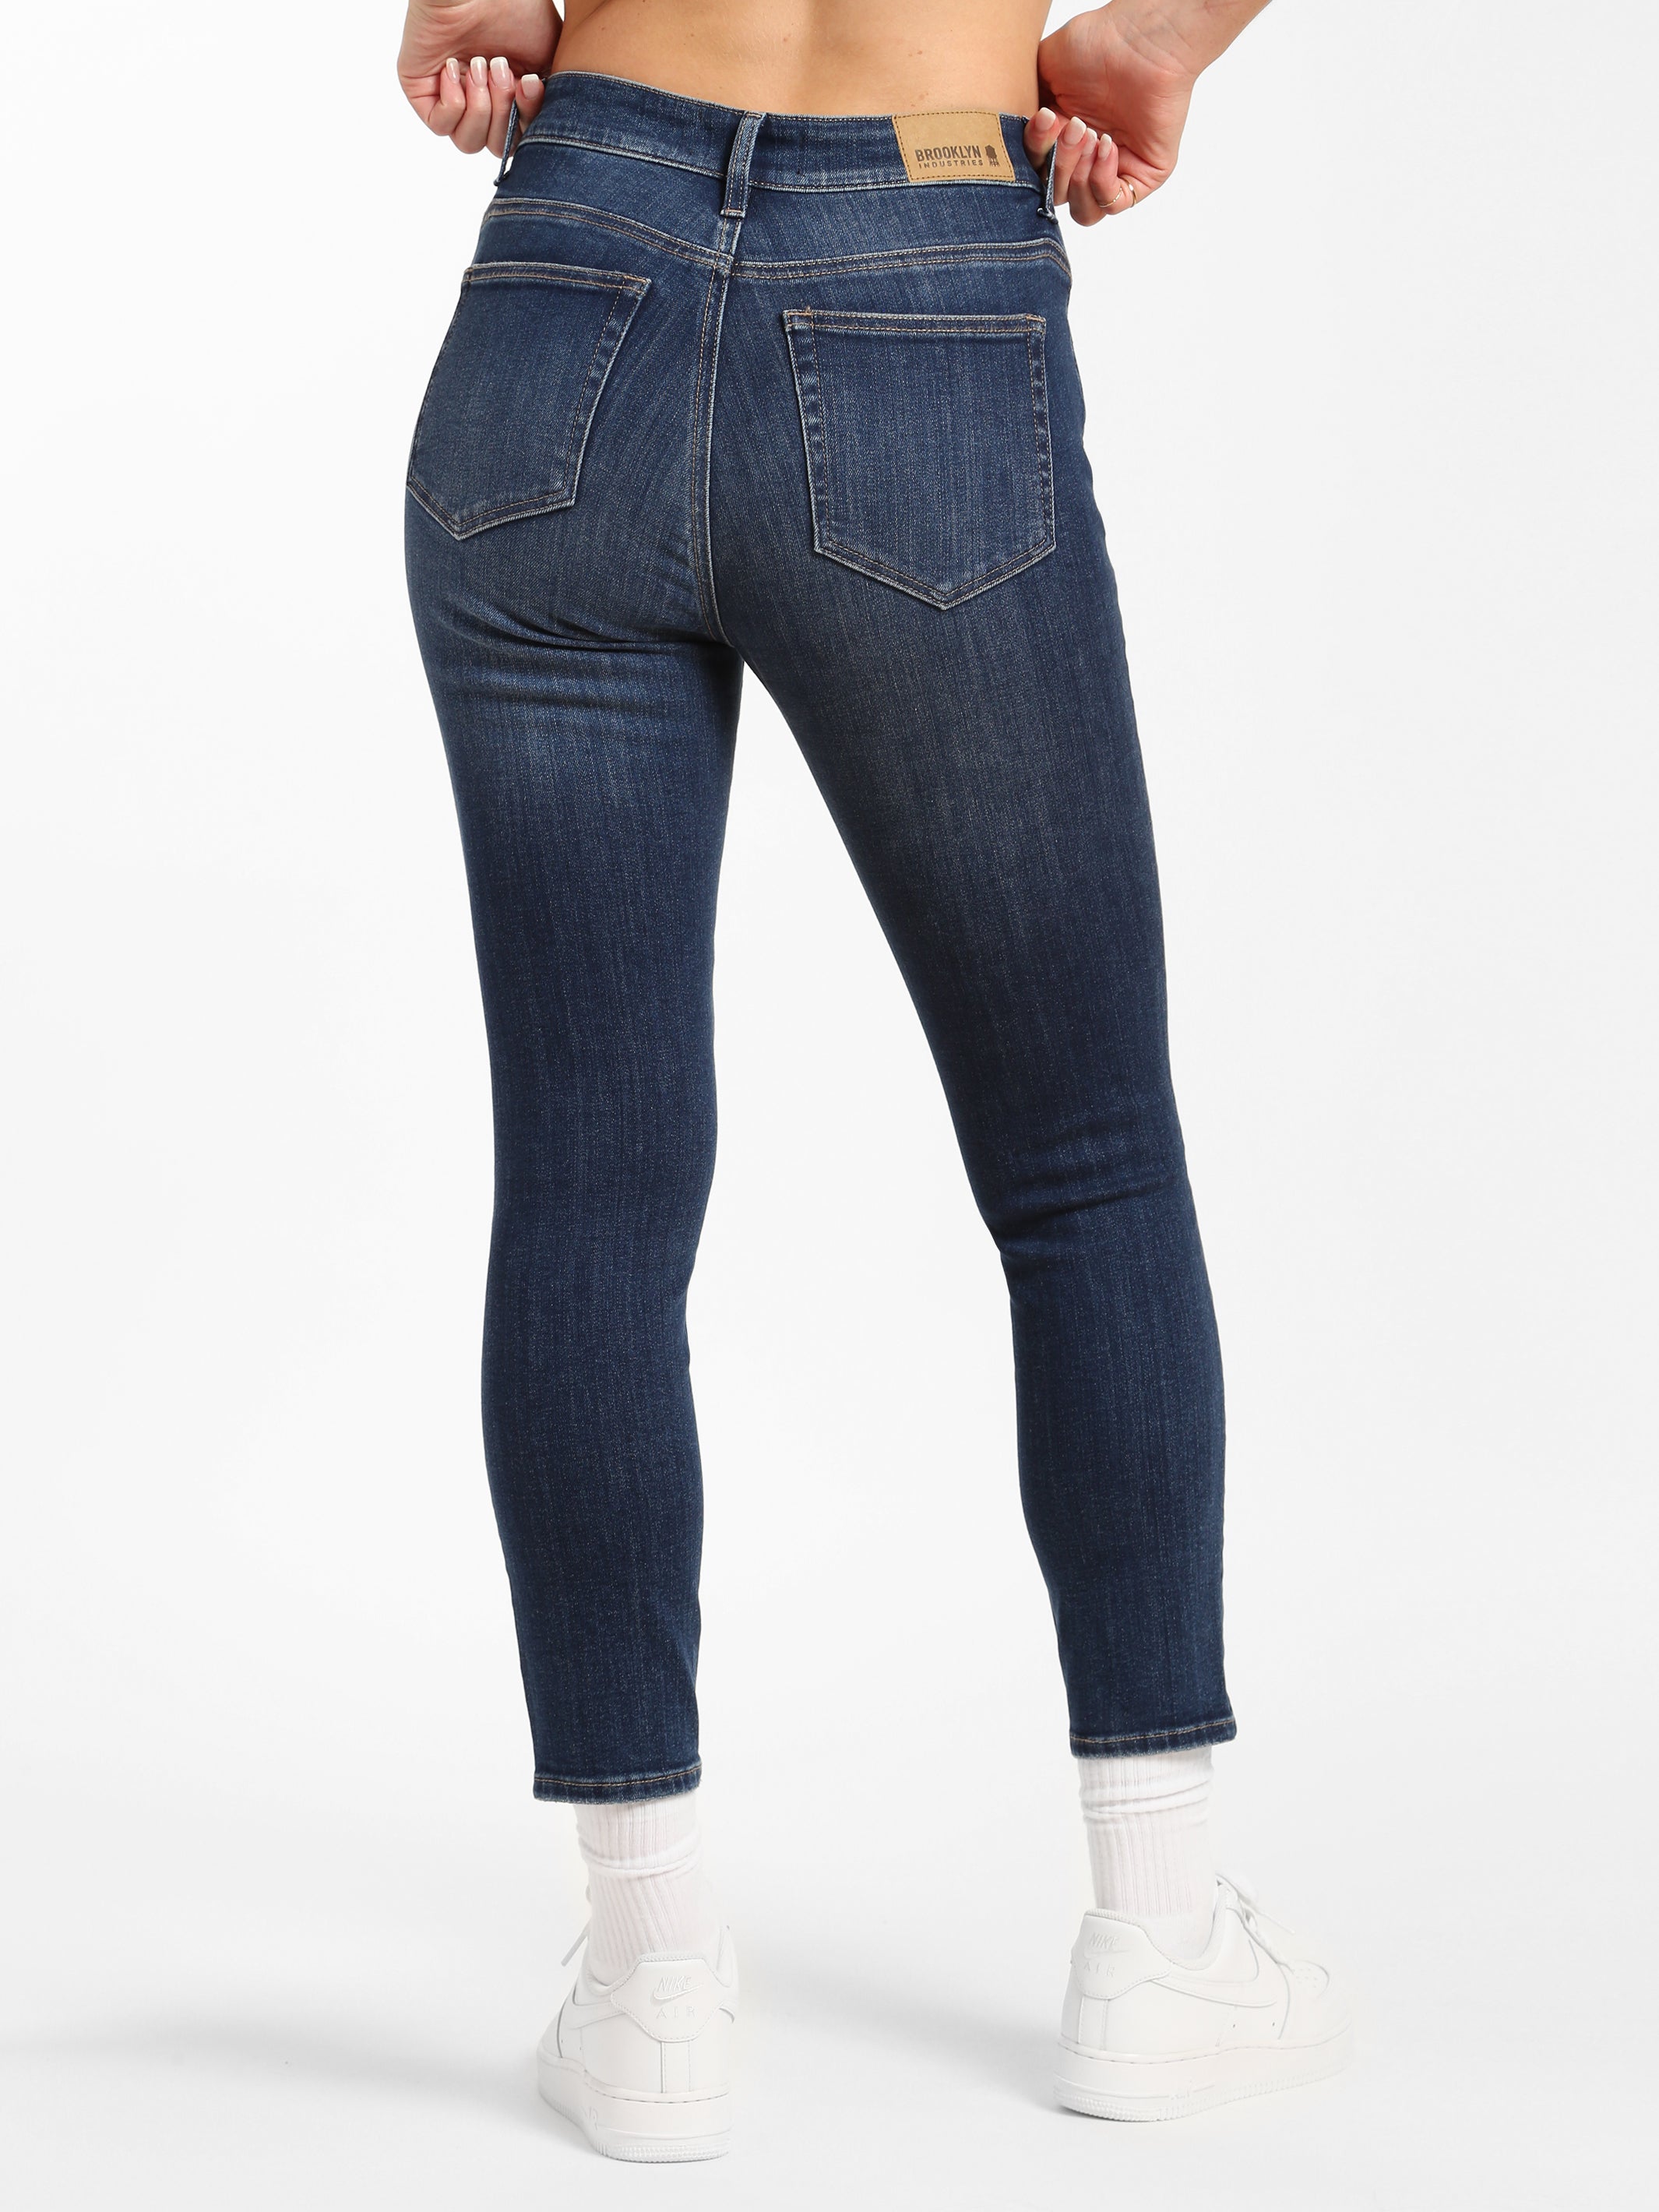 Brooklyn Industries Women's Metro Flare Jeans in Mid Denim